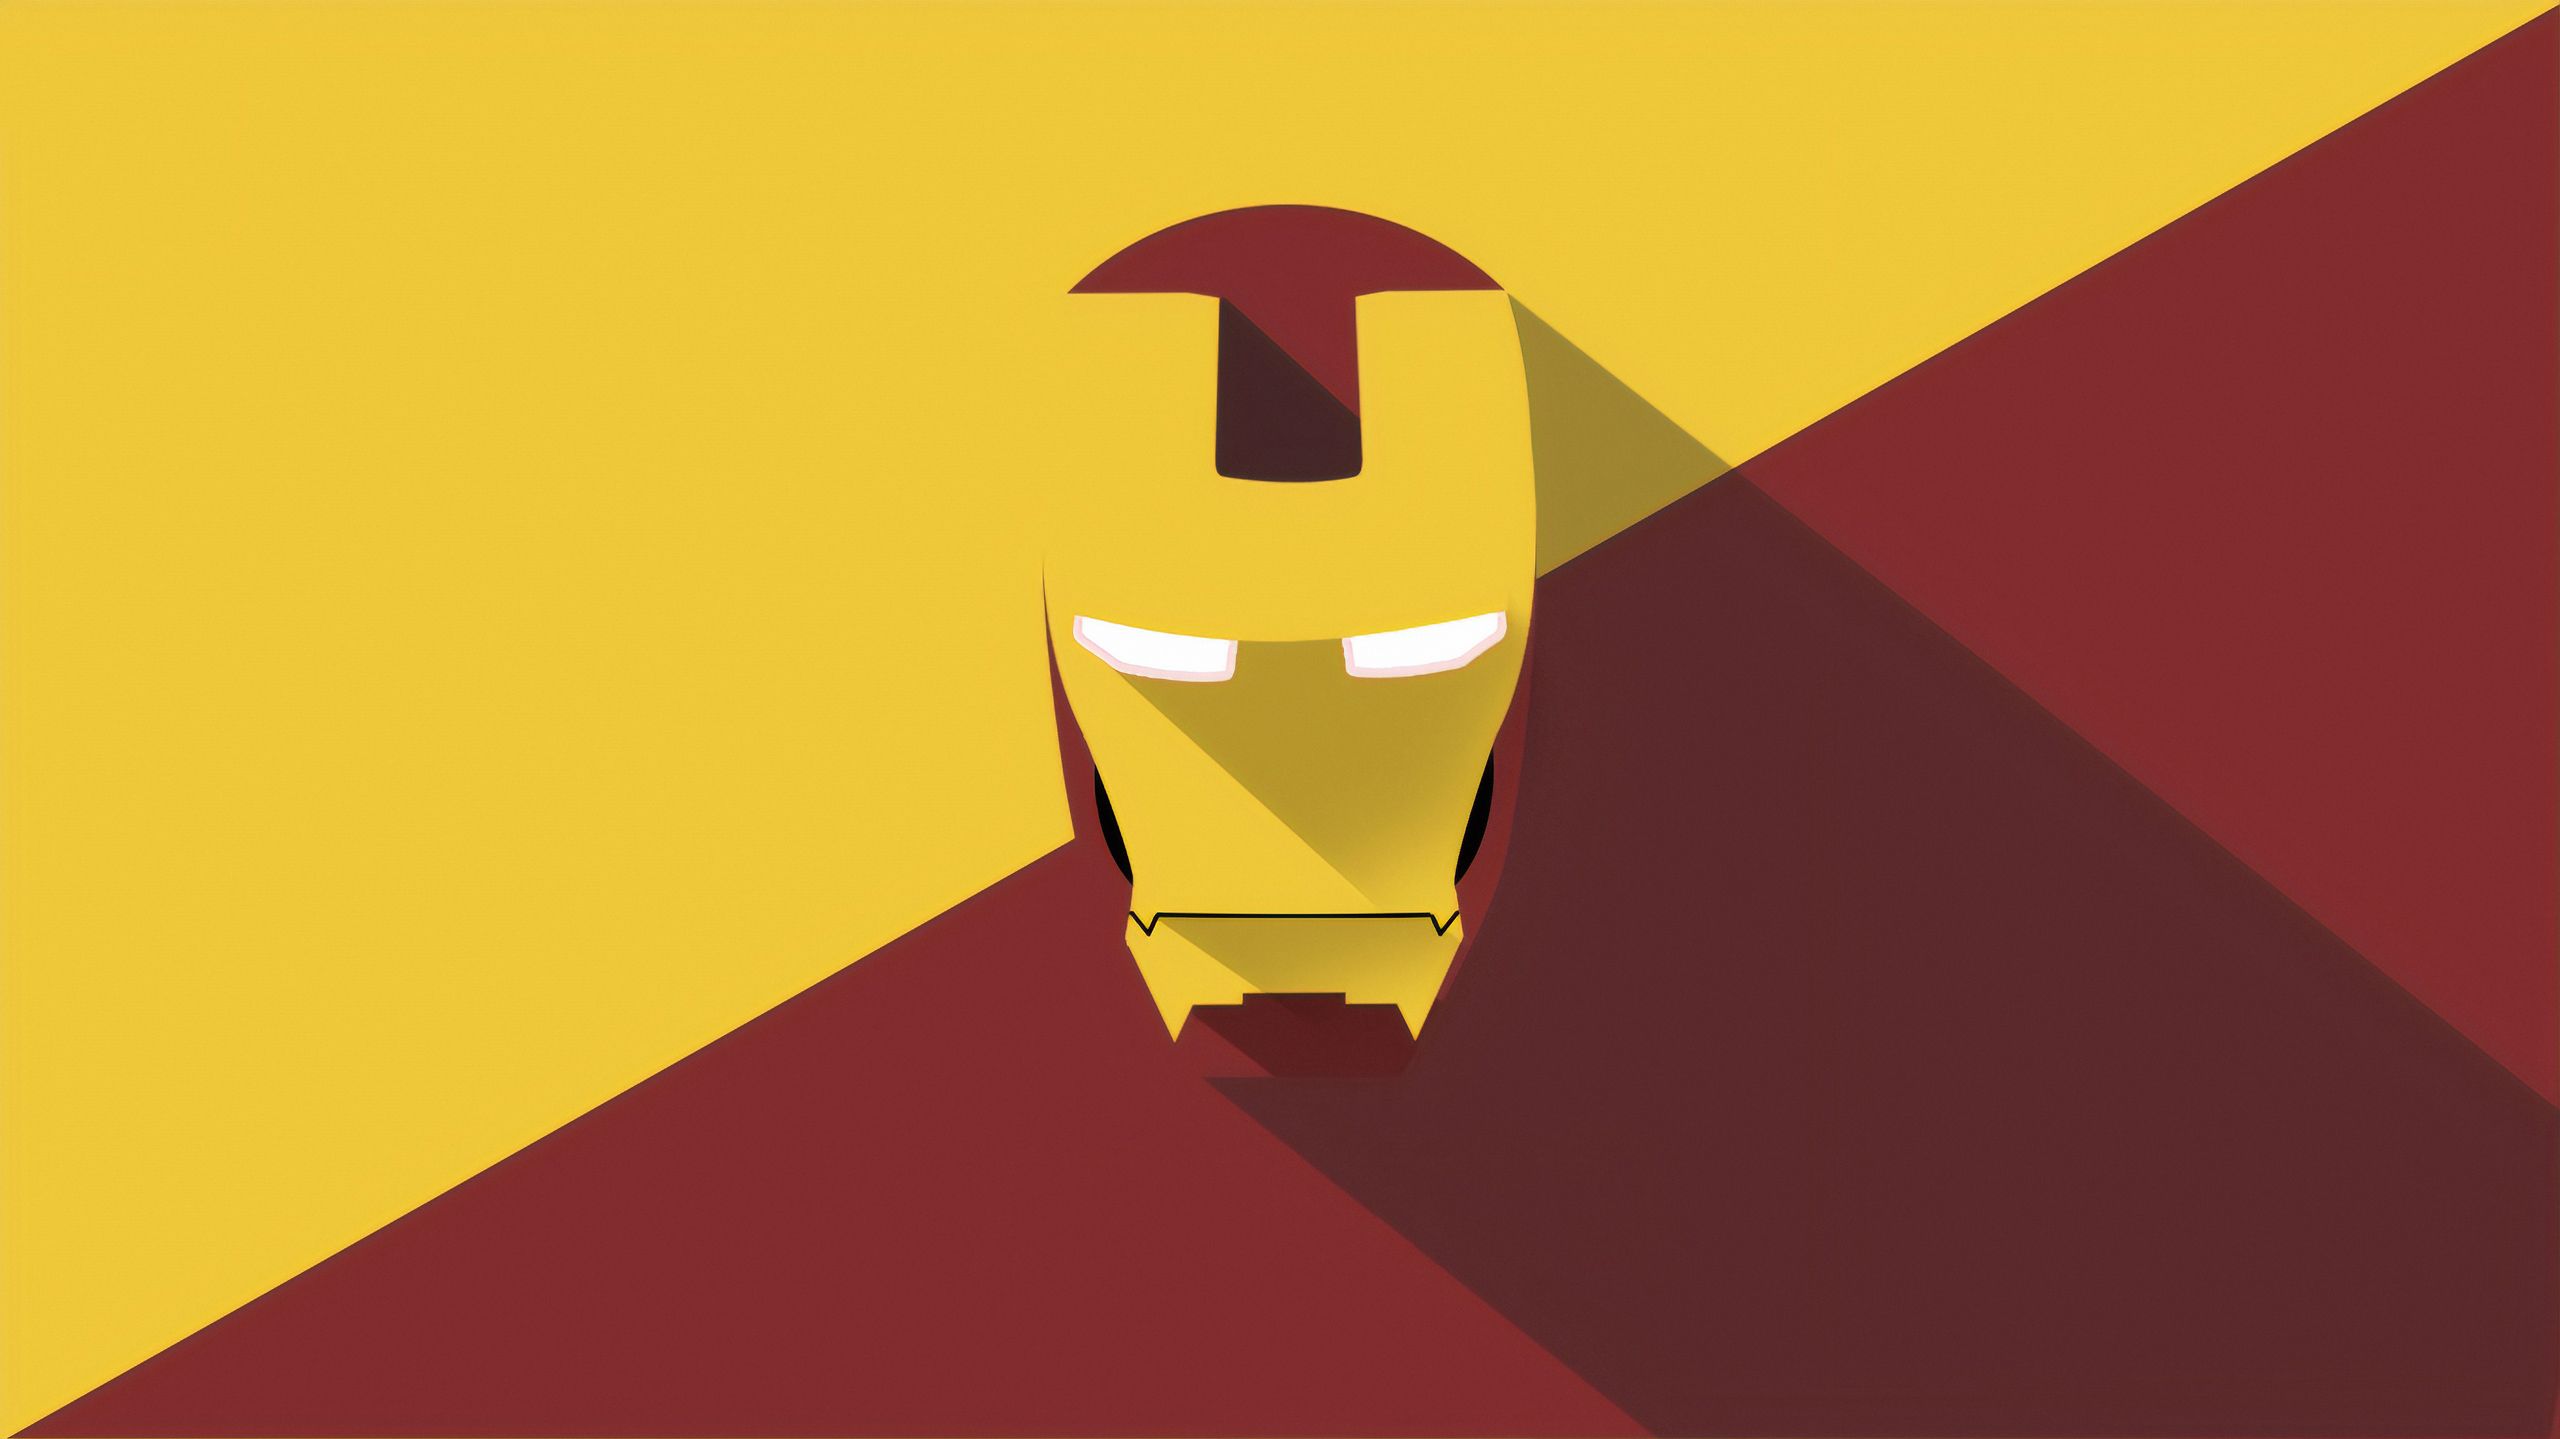 Iron Man Mask Minimal 2560x1080 Resolution Wallpaper, HD Minimalist 4K Wallpaper, Image, Photo and Background